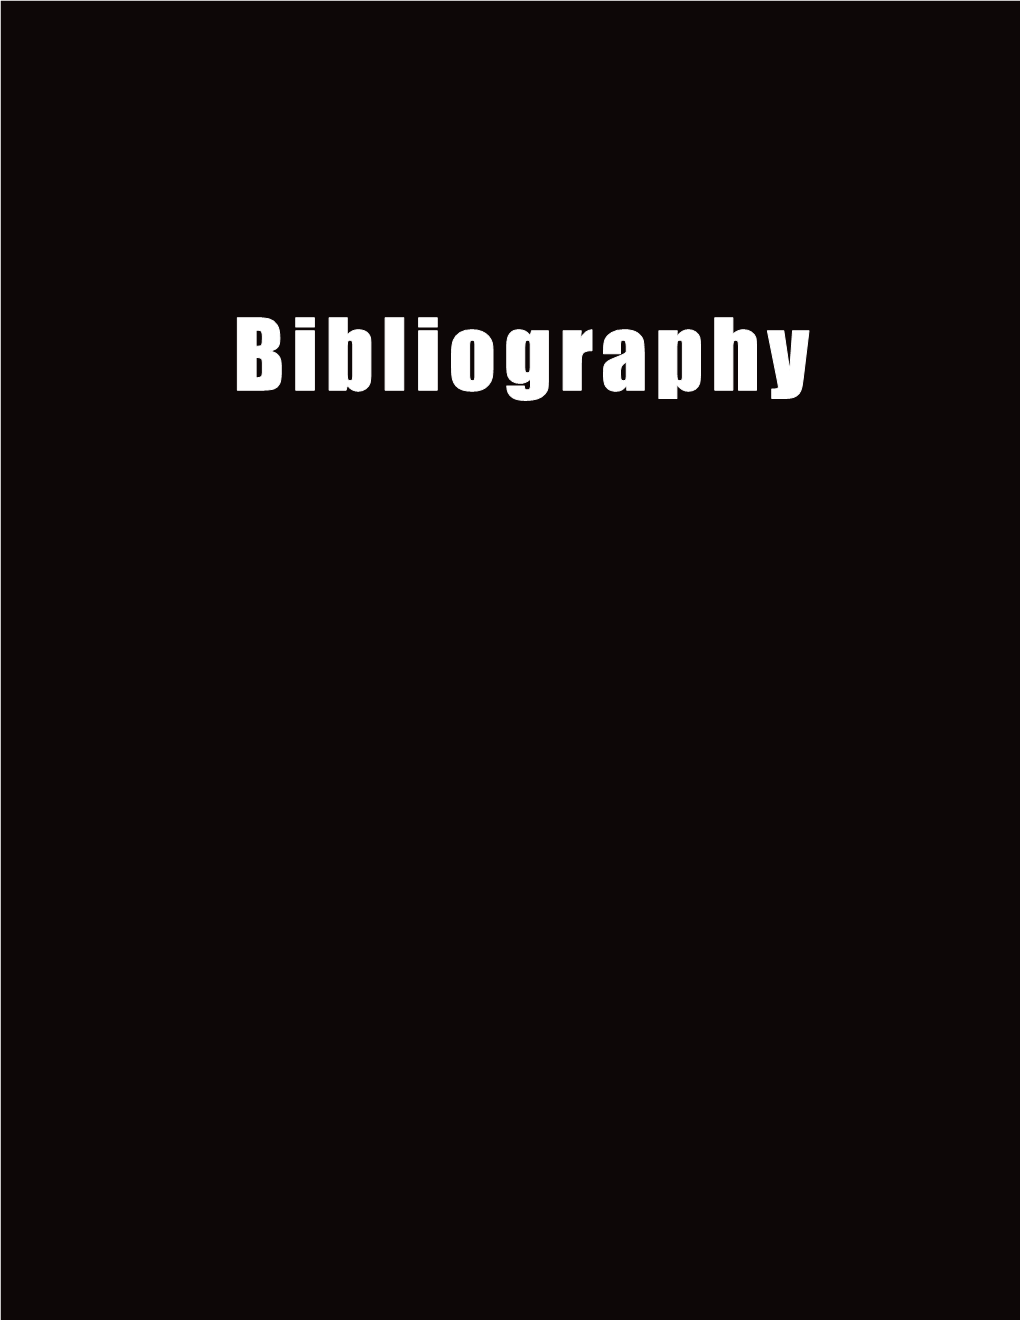 Bibliography UNITE BIBLIOGRAPHY